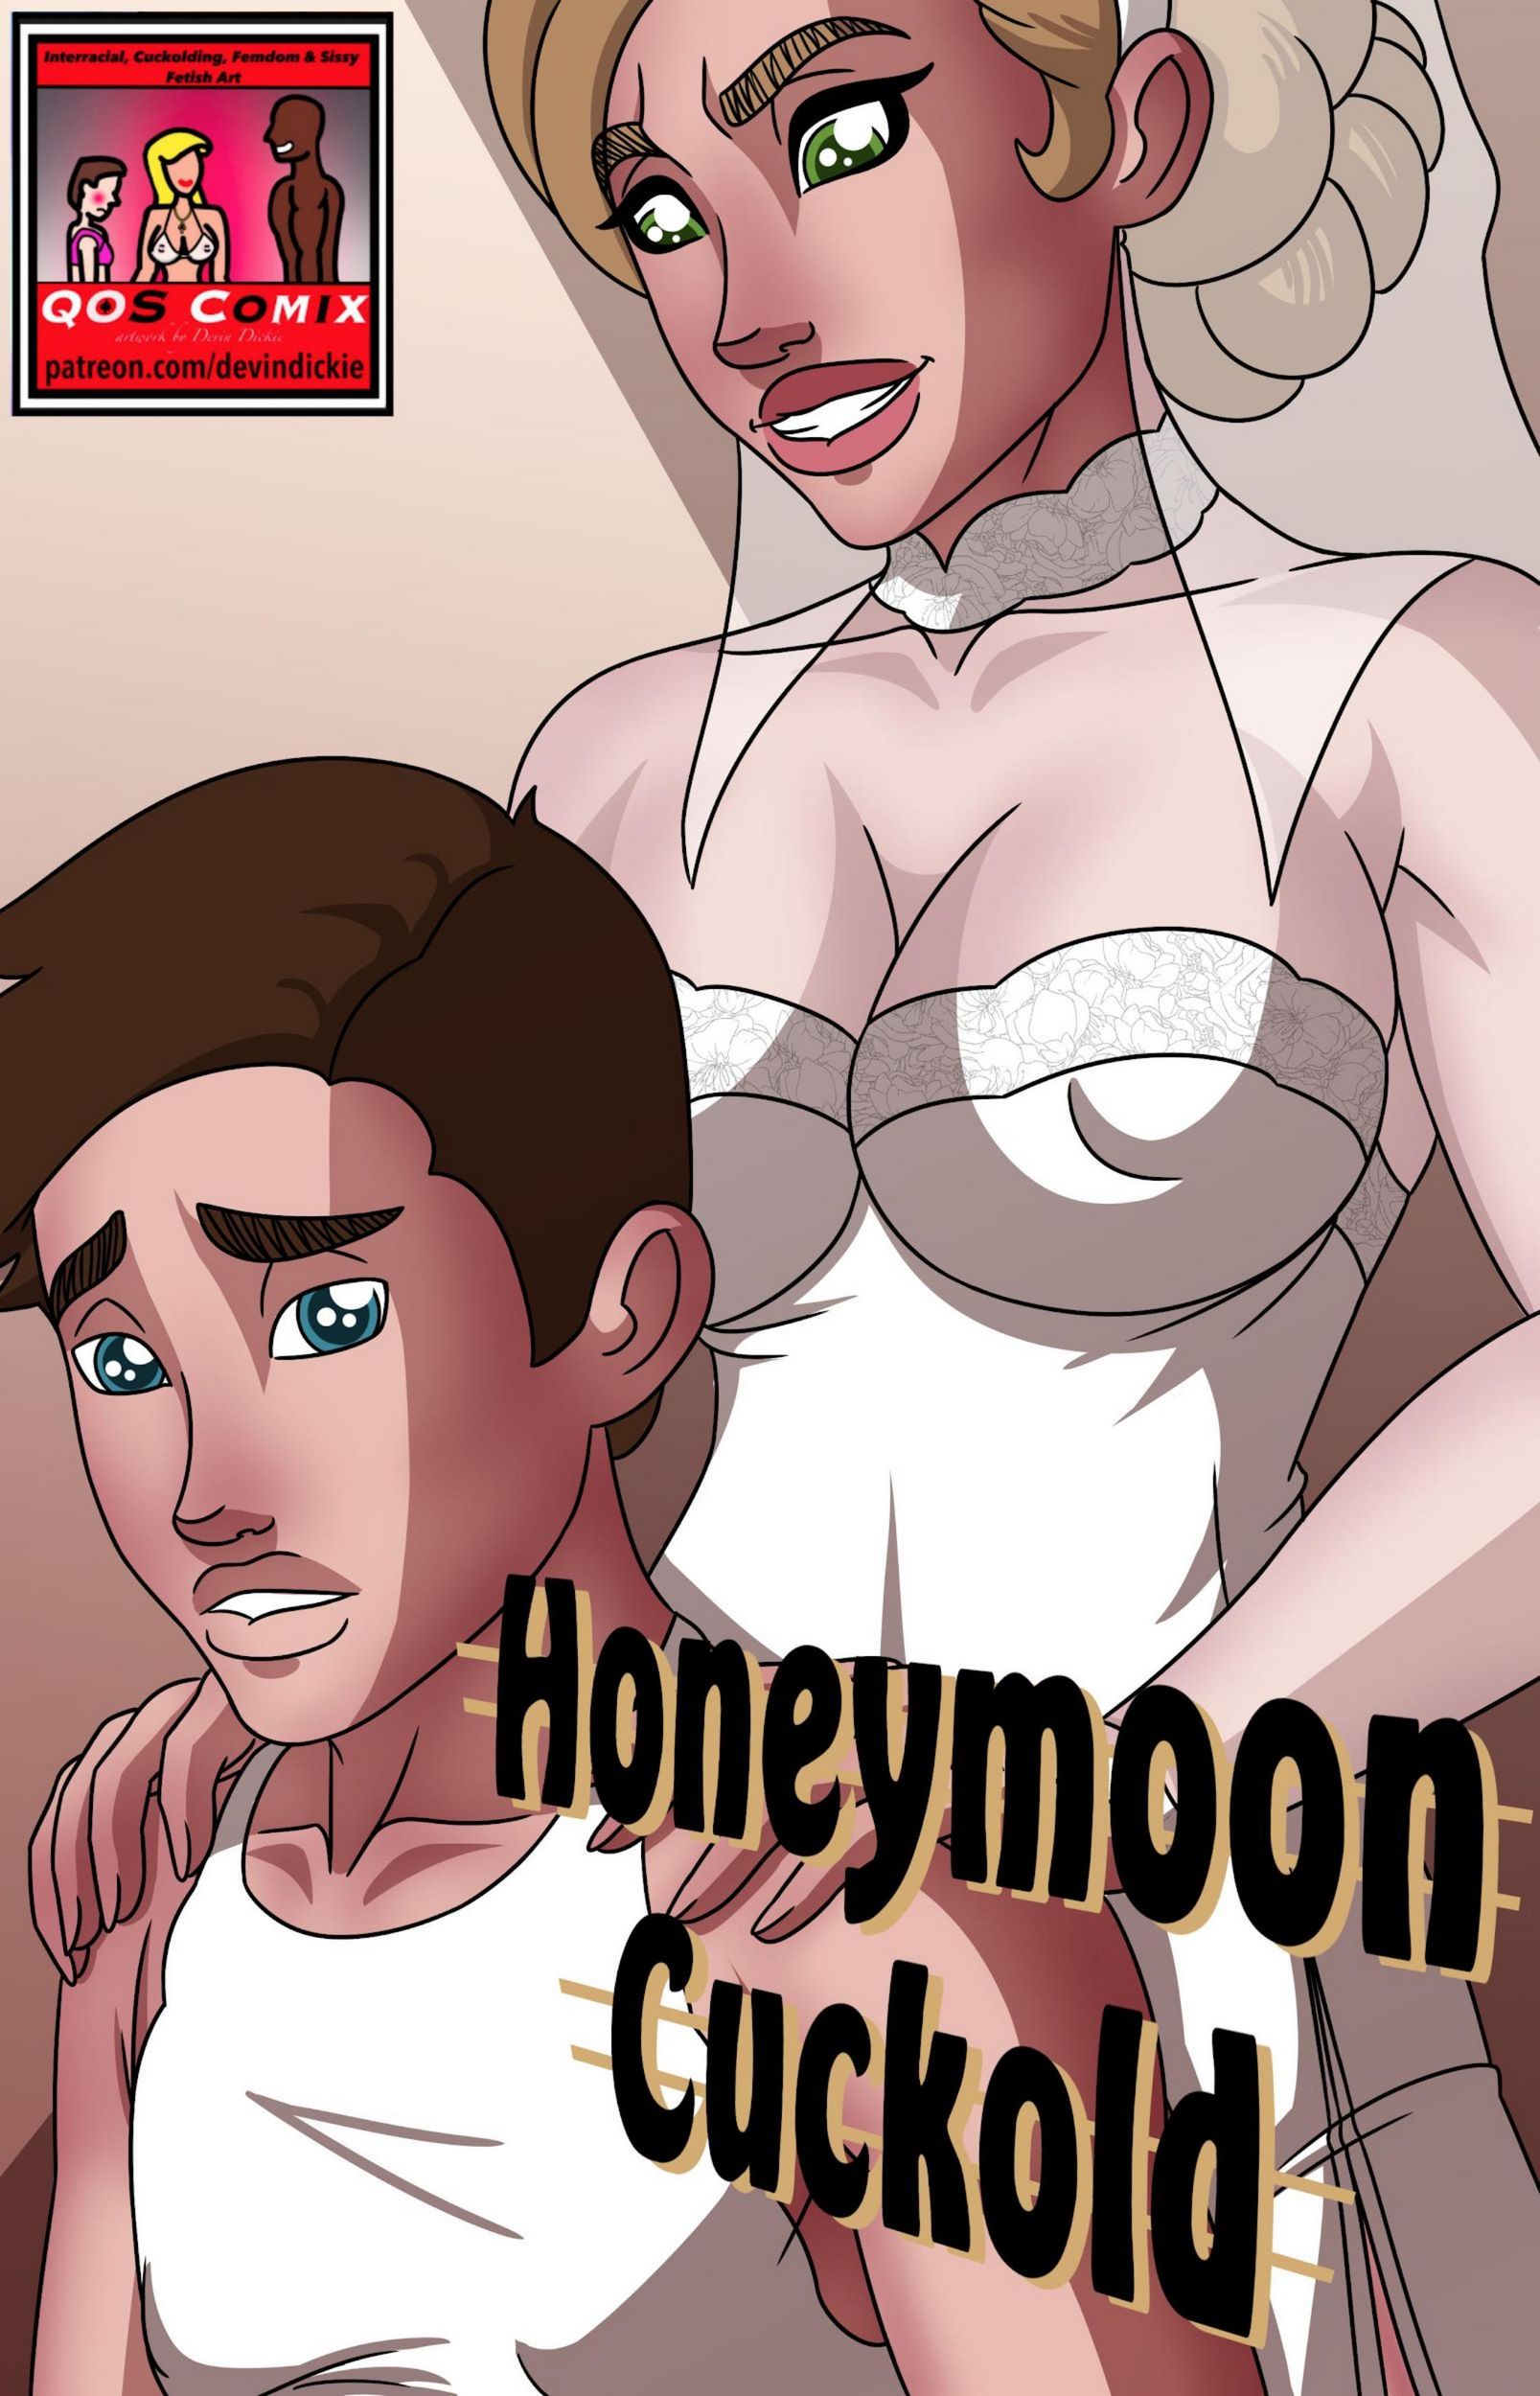 Honeymoon Cuckold photo